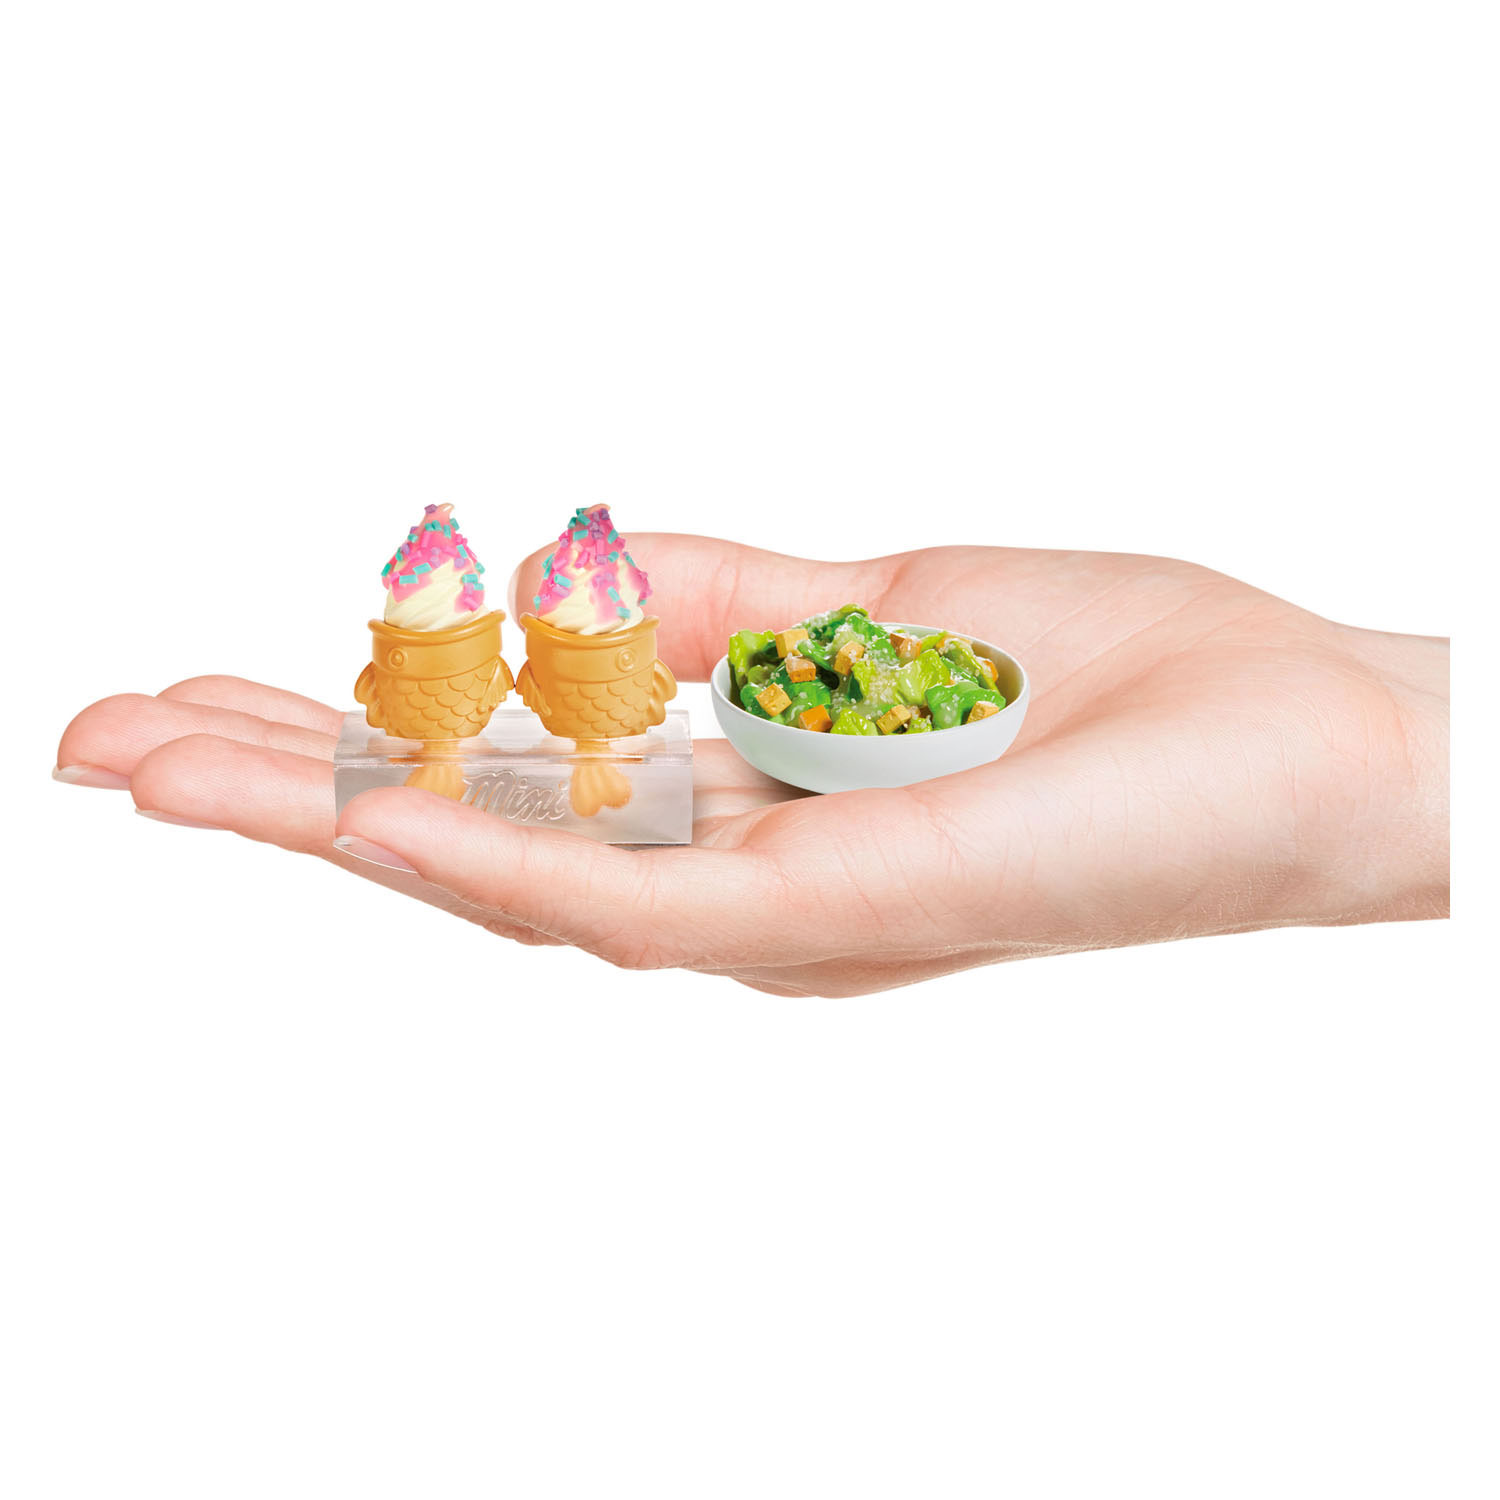 MGA's Miniverse- Make It Mini Foods: Diner Series 3A